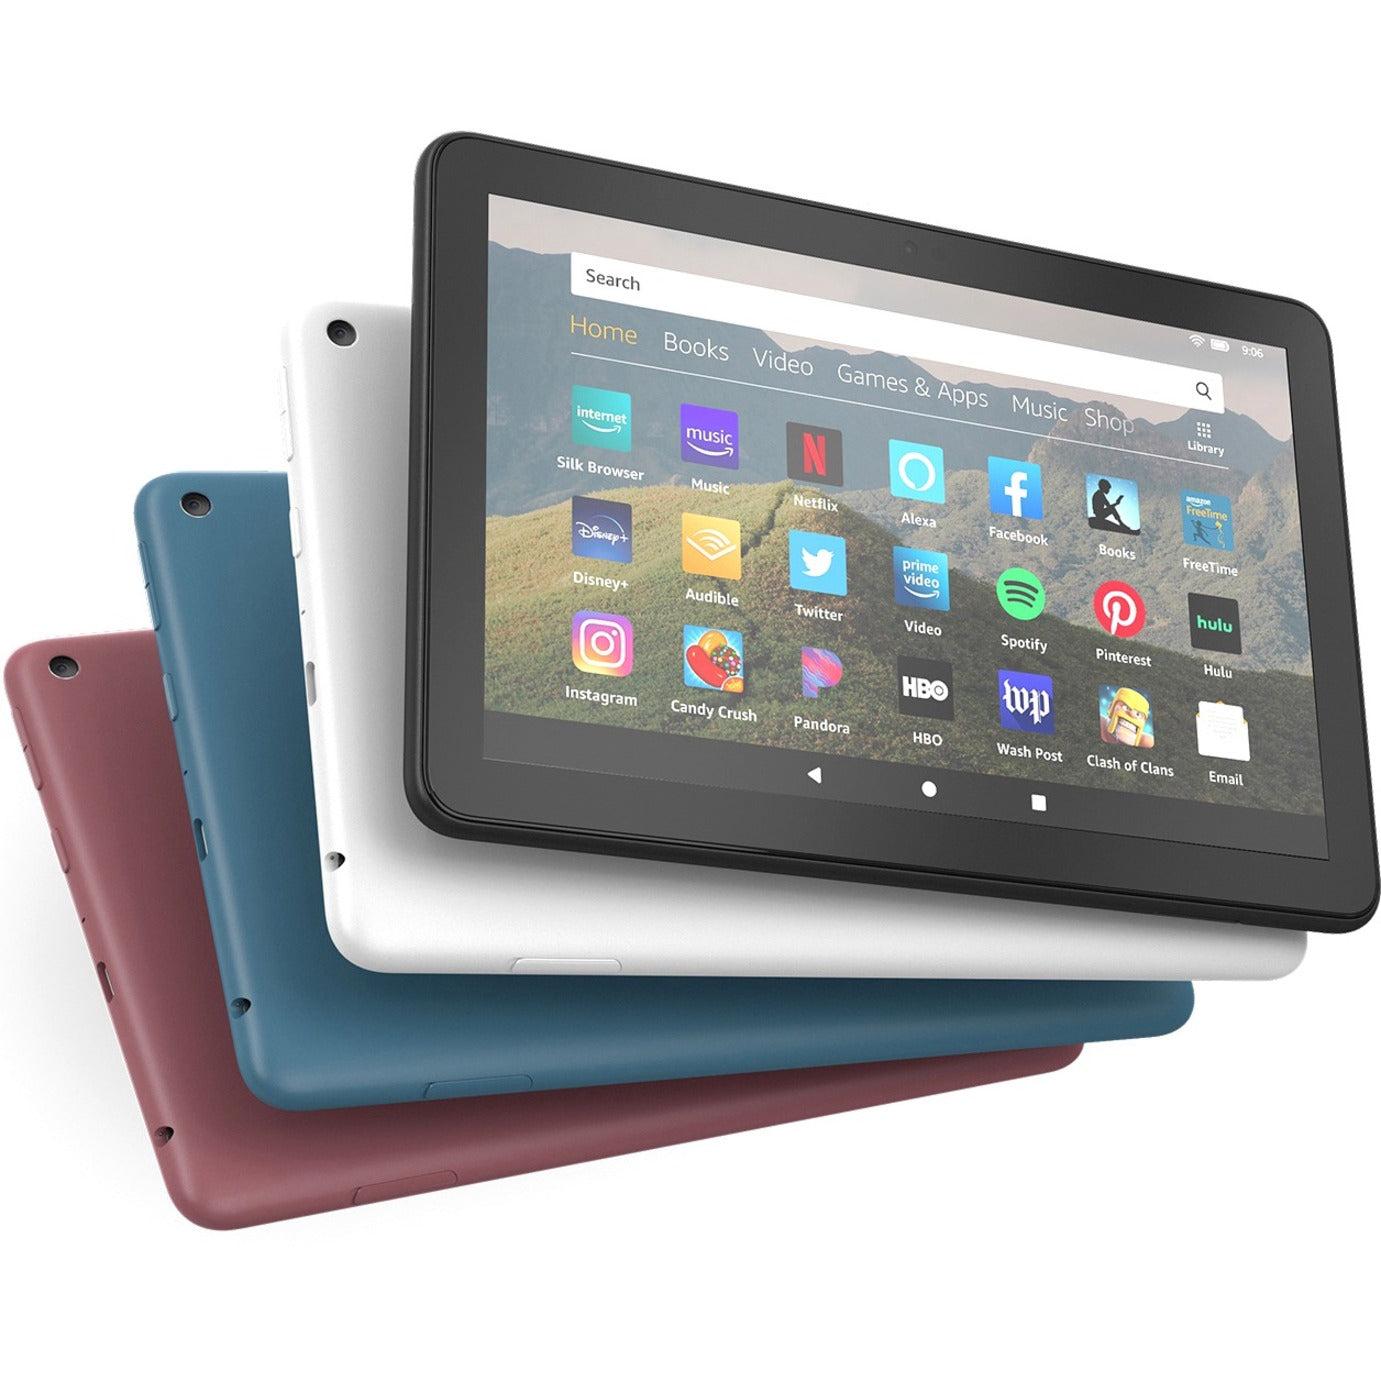 Amazon B0839MQ8Y8 Fire HD 8 Tablet, 8" WXGA, Quad-core 2 GHz, 2 GB RAM, 64 GB Storage, Black